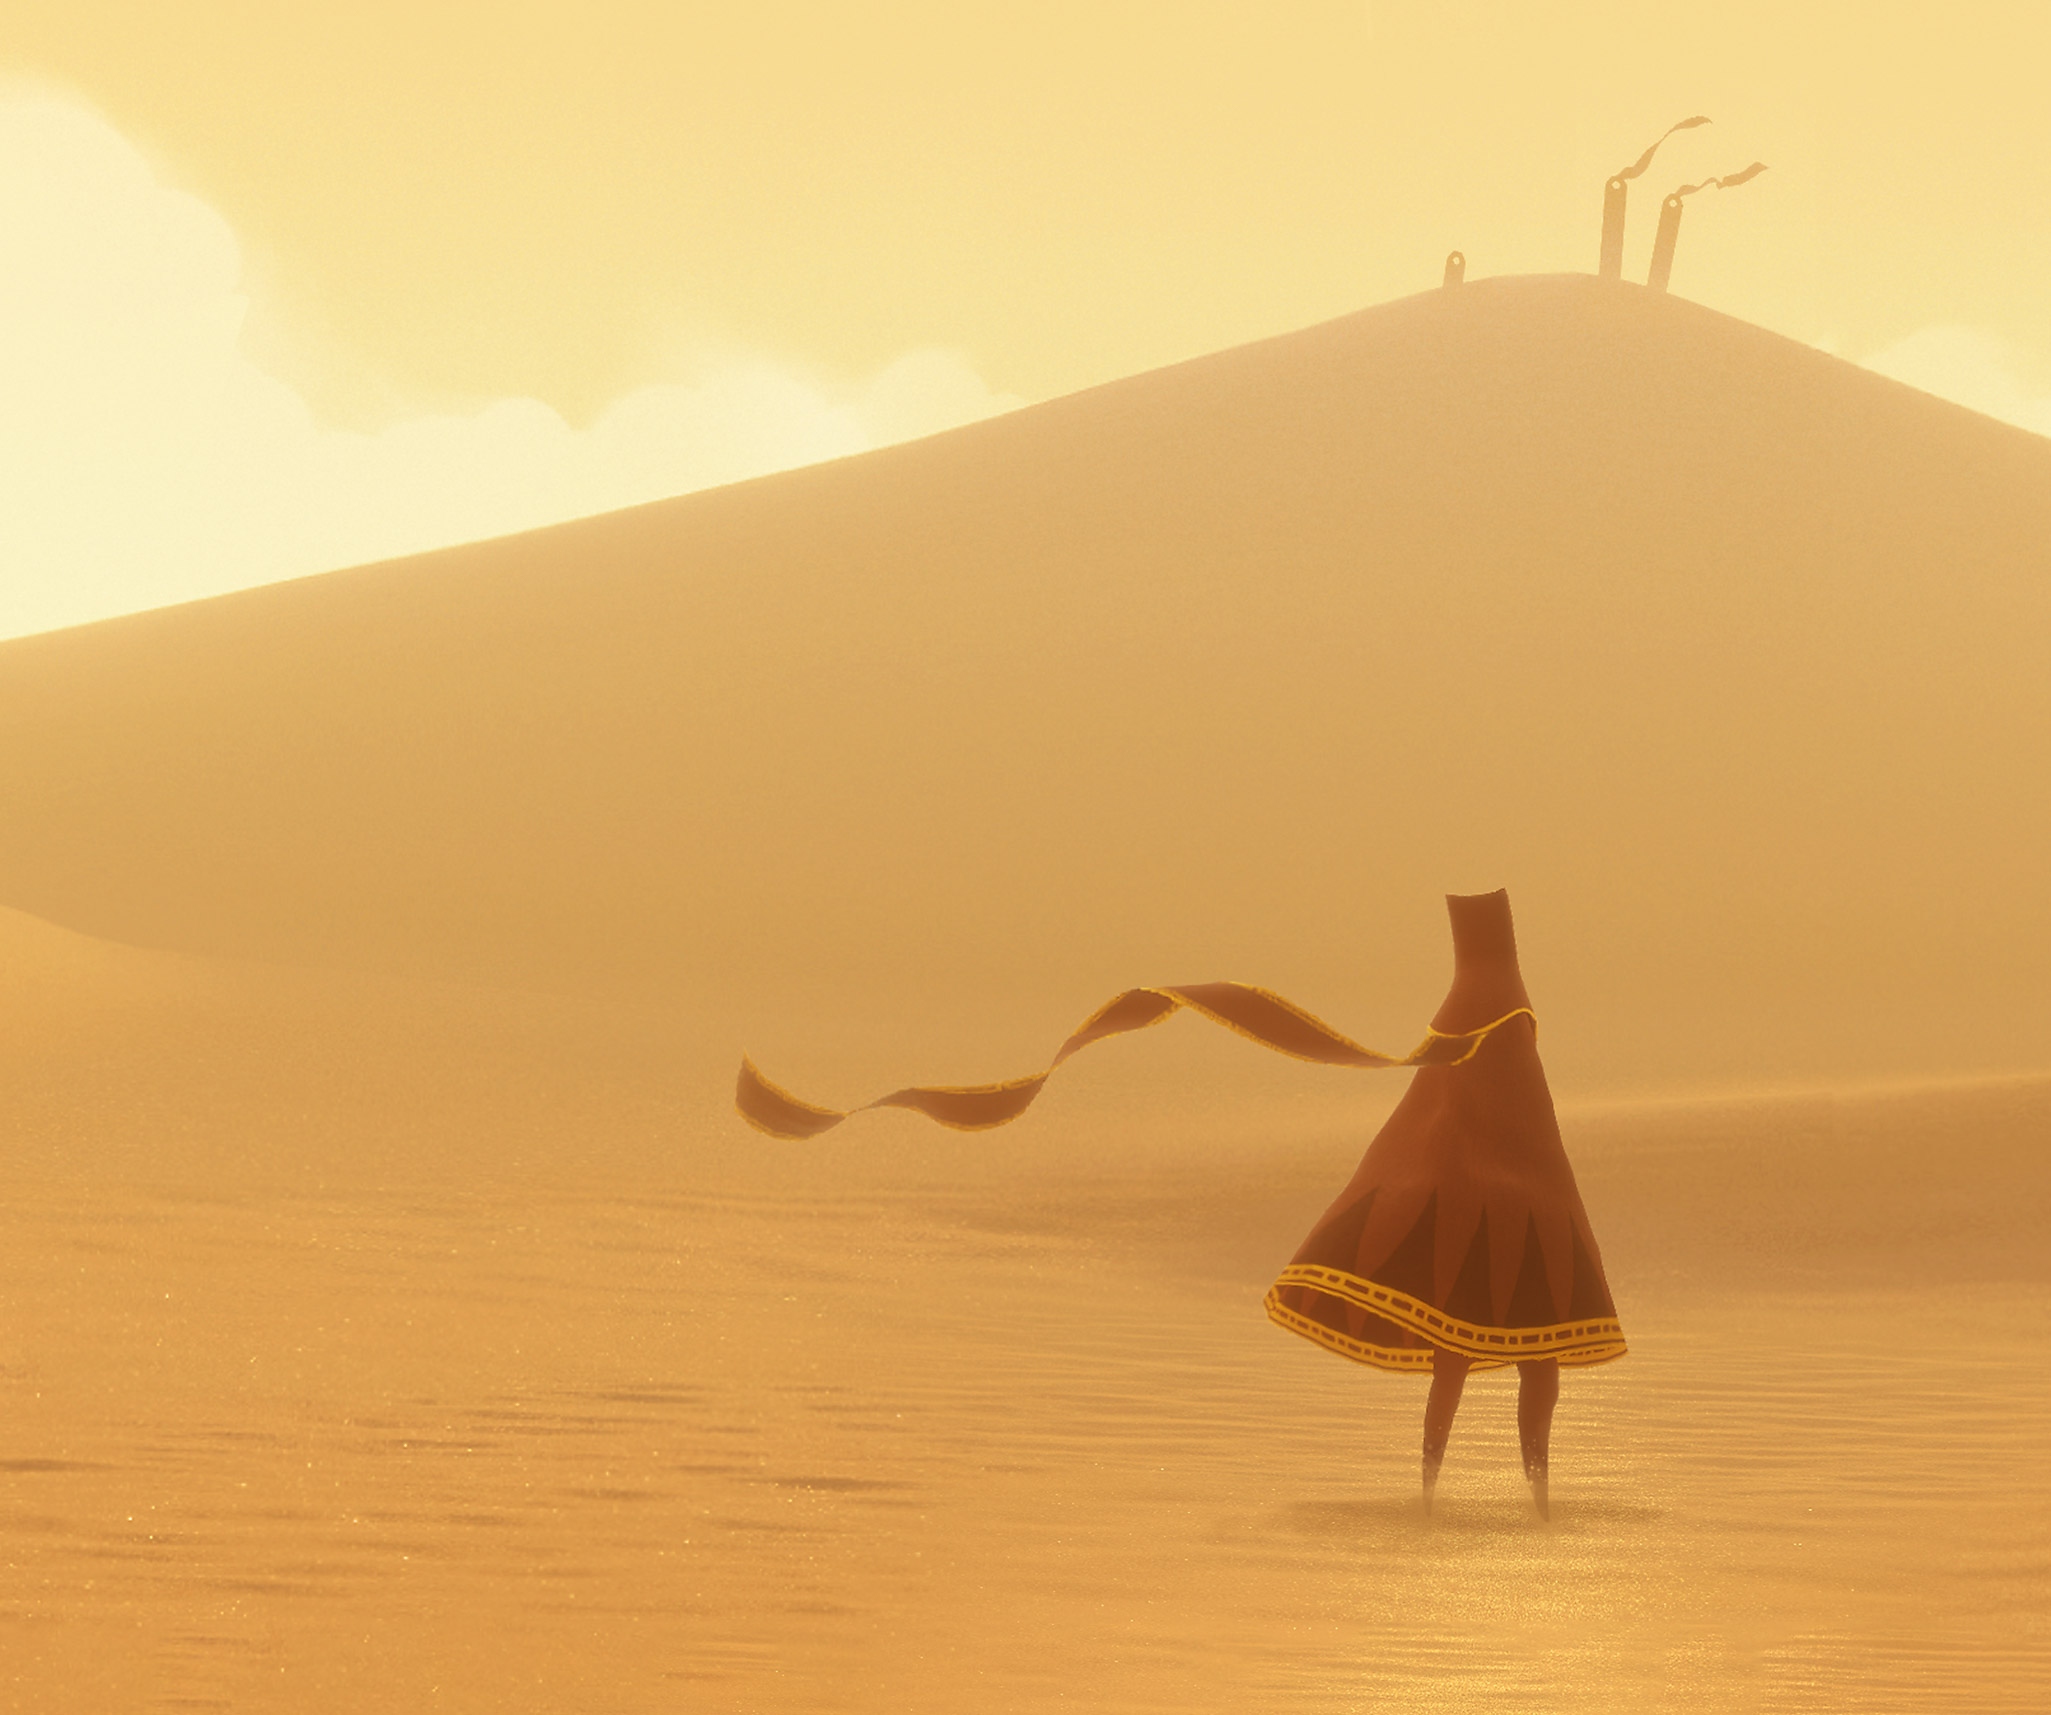 Journey key art featuring main character 'The Traveller' stood in sprawling, sunlit desert.